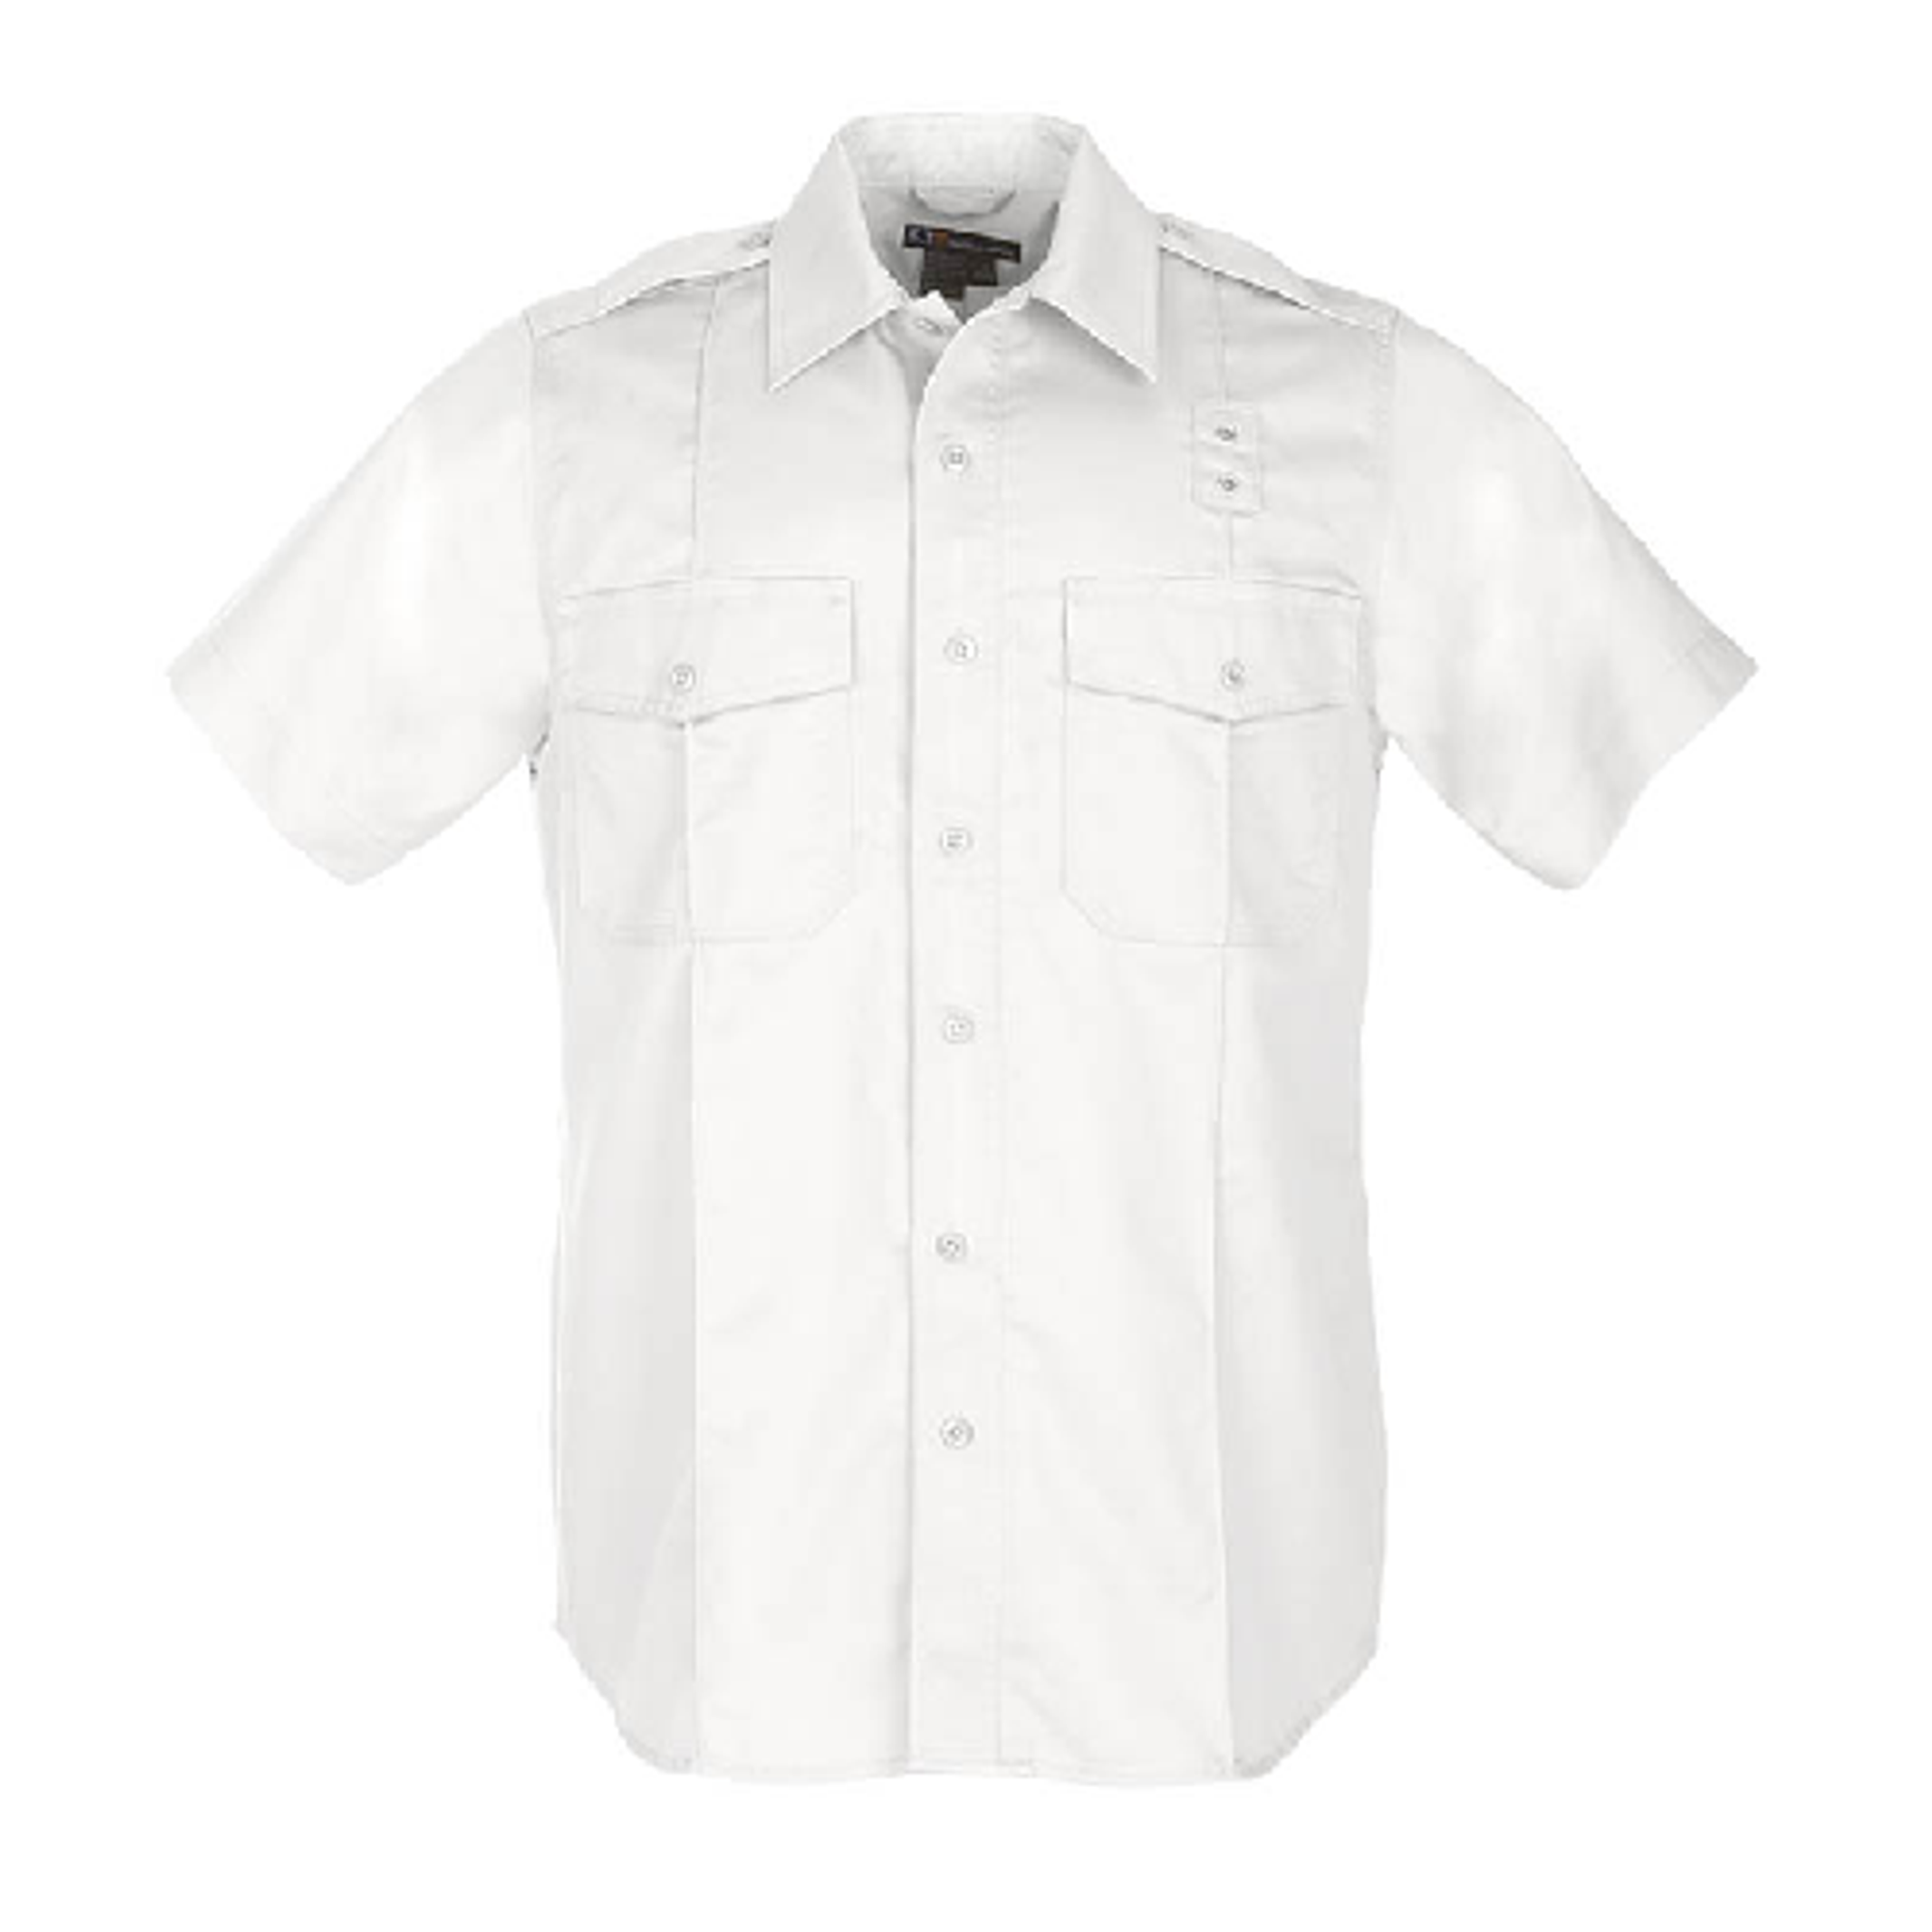 Class A Pdu Twill Shirt - KR5-711830102XLR